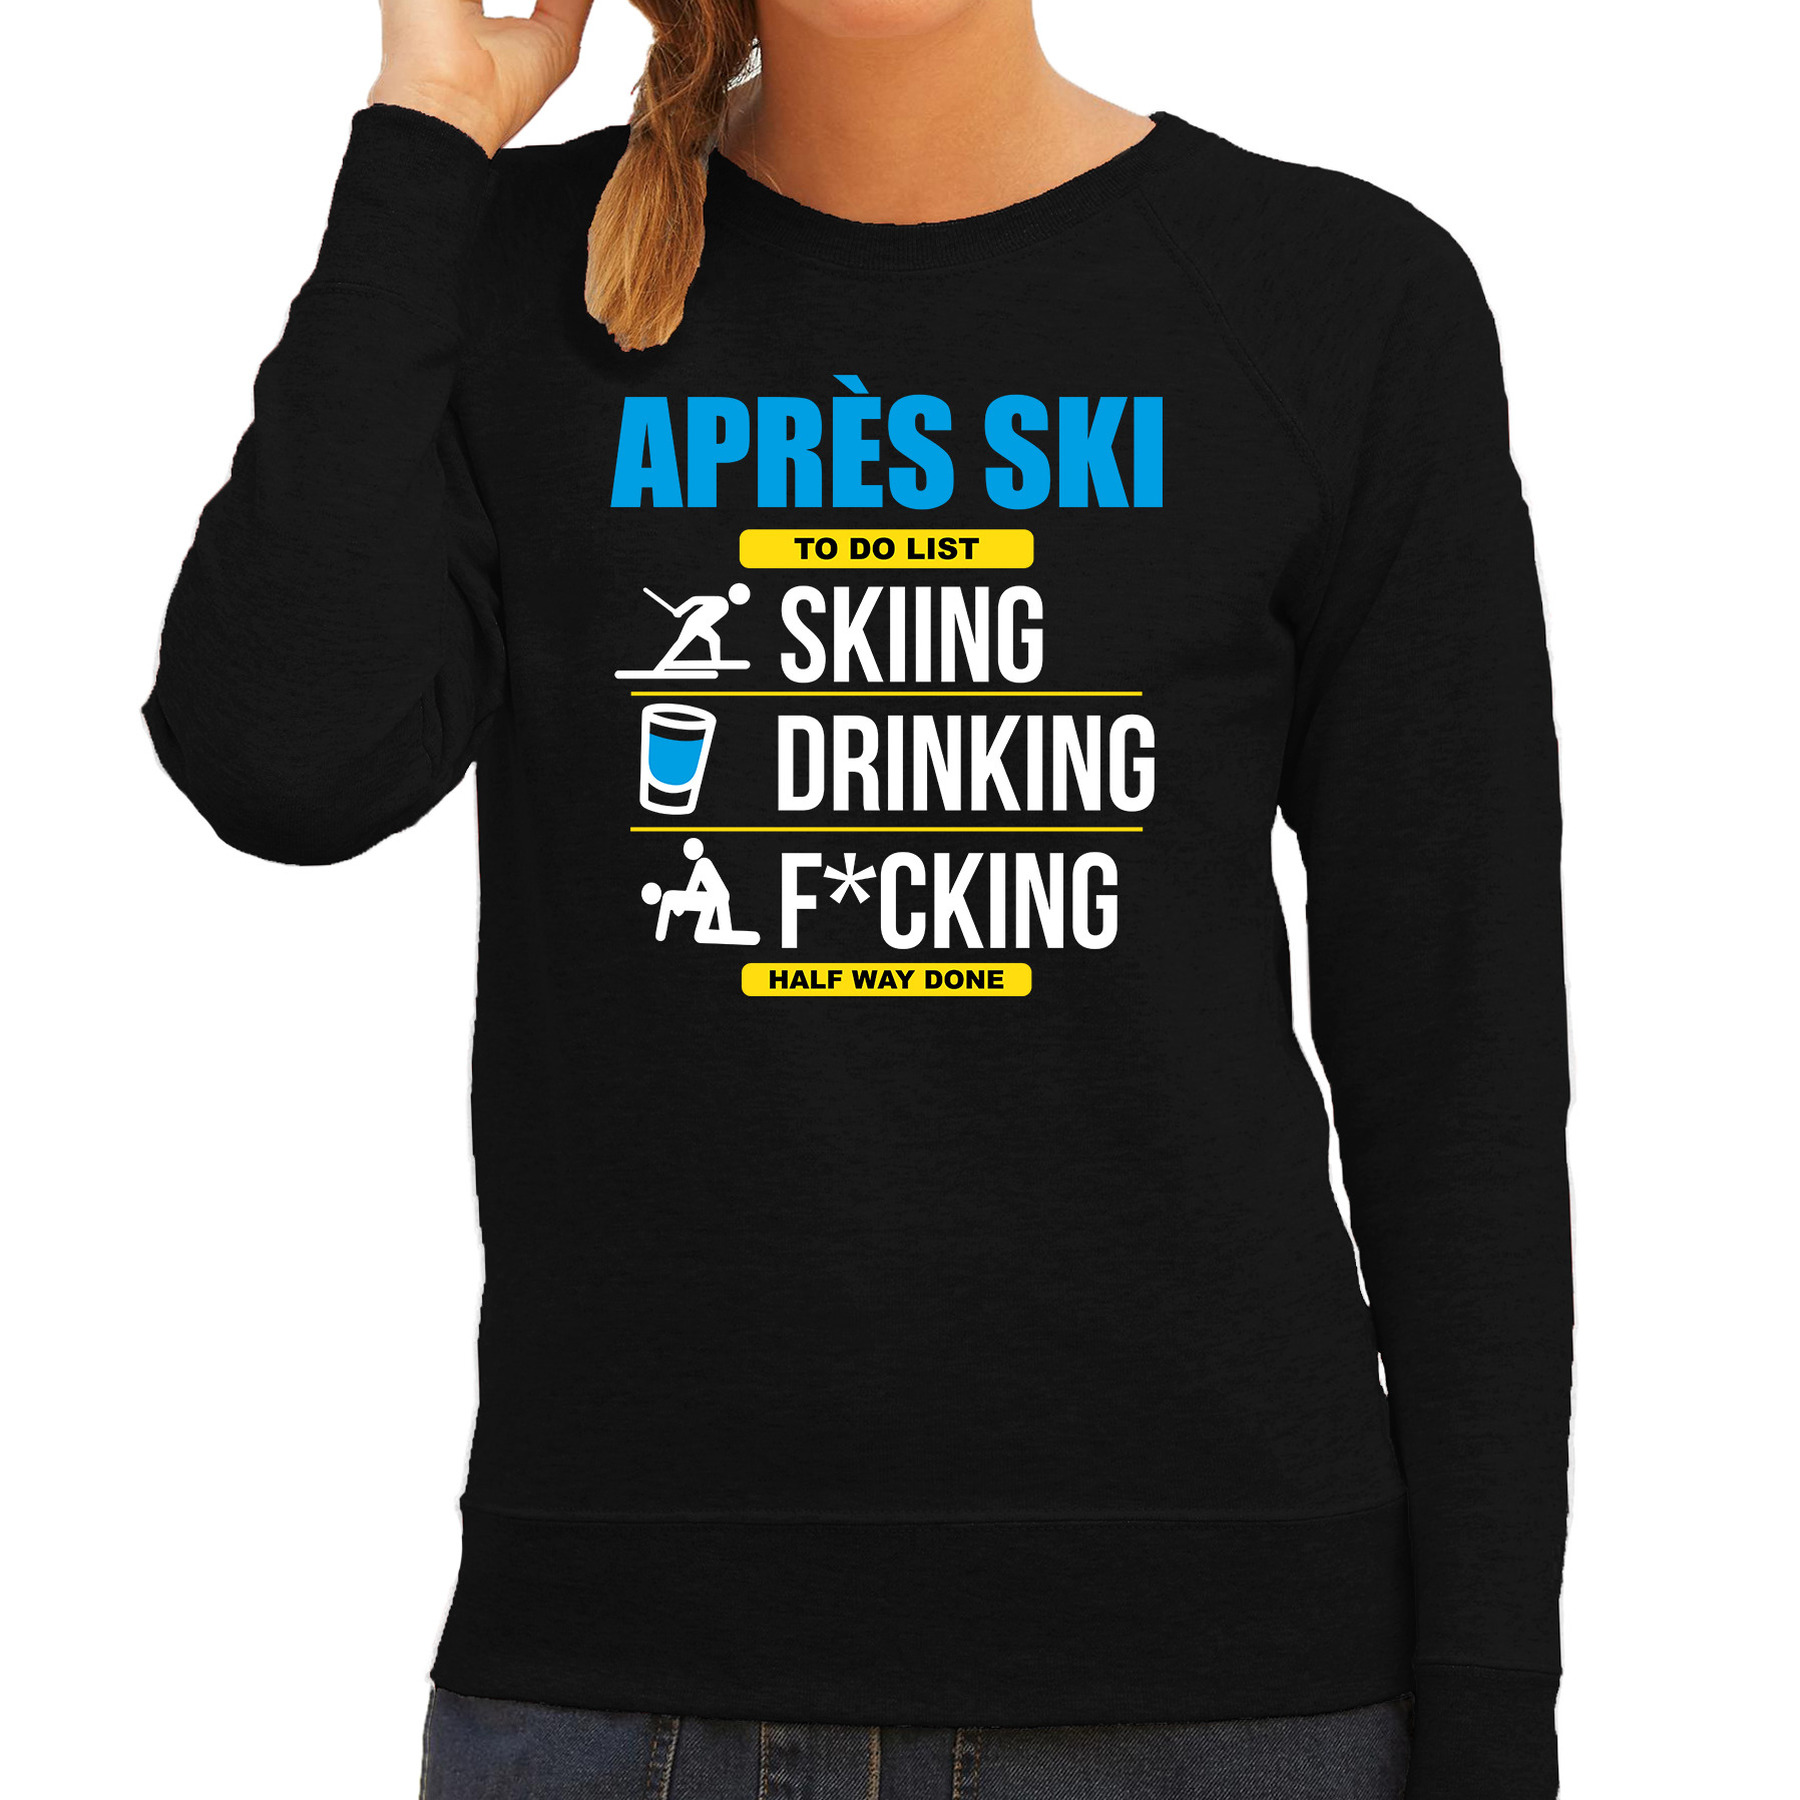 Apres ski trui to do list skieen zwart dames Wintersport sweater Foute apres ski outfit